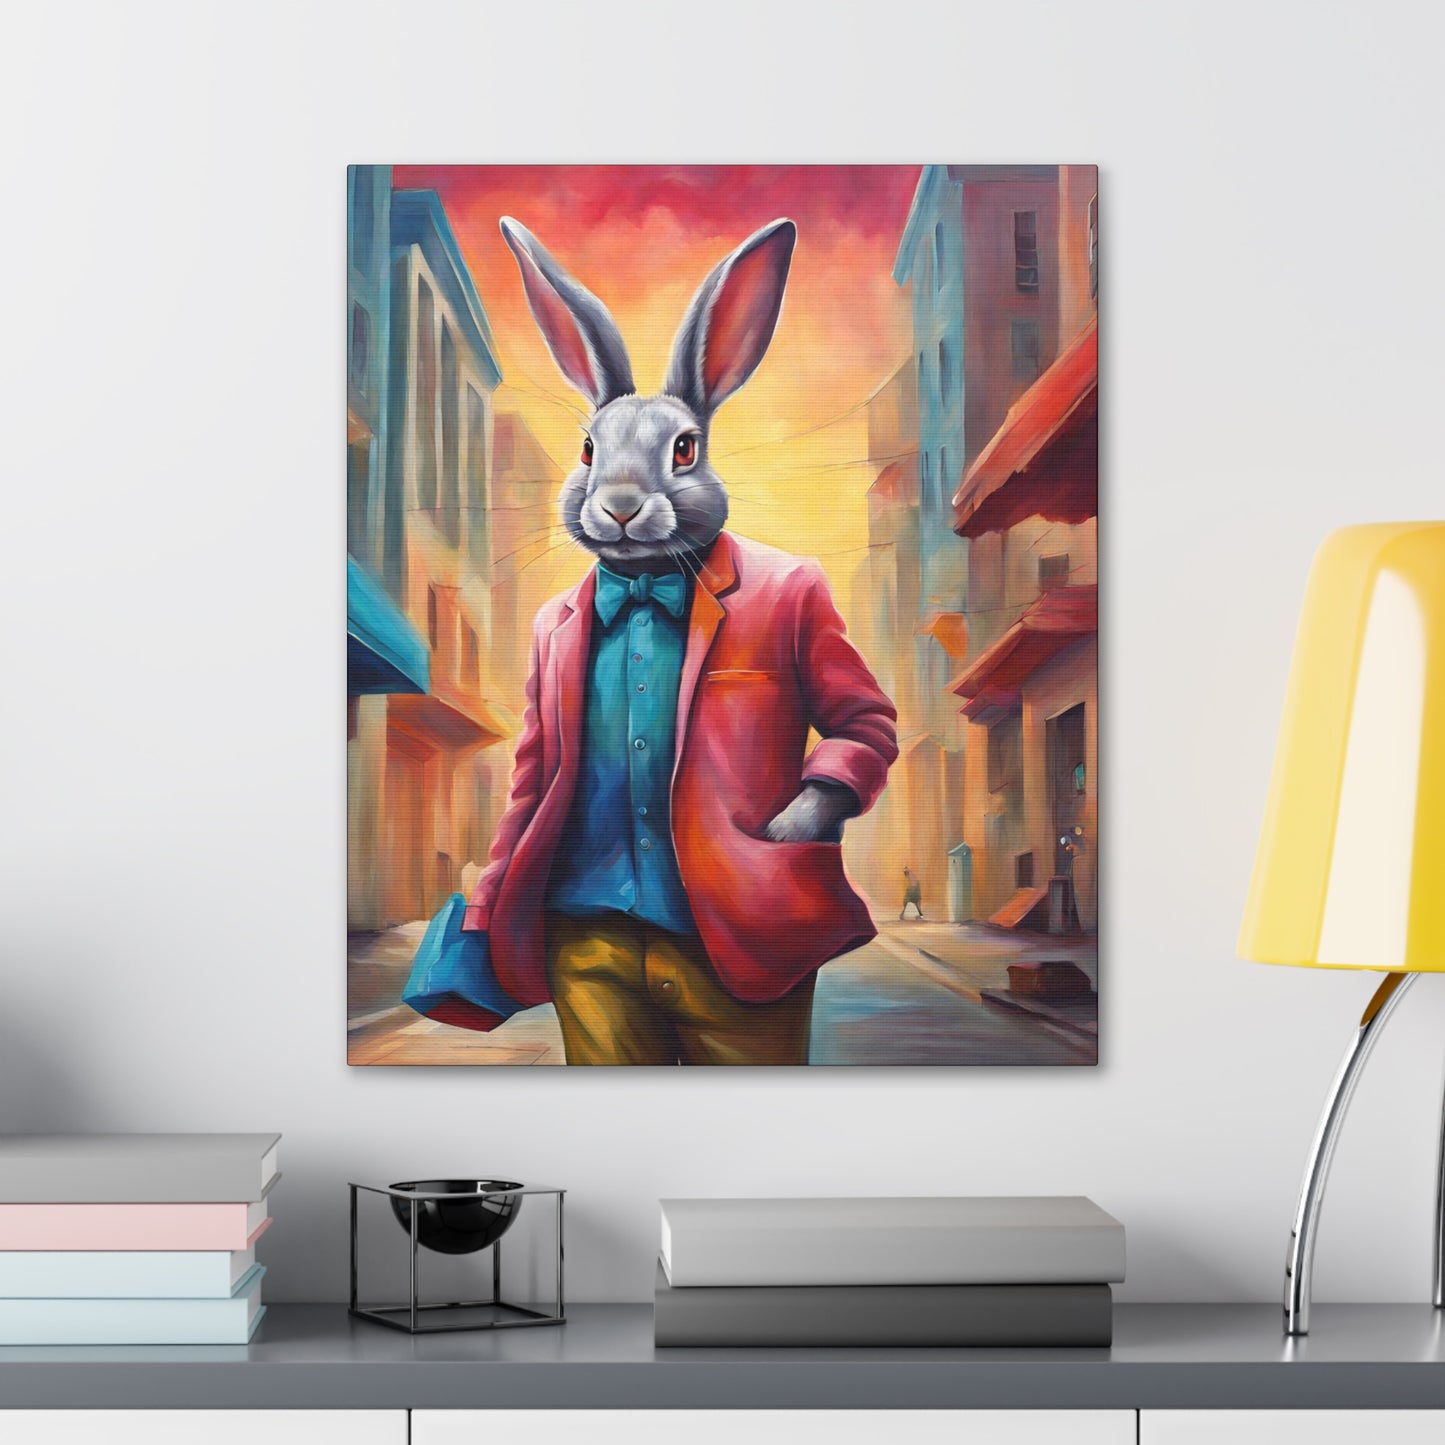 Canvas Gallery Wraps - Animal Life Rabbit